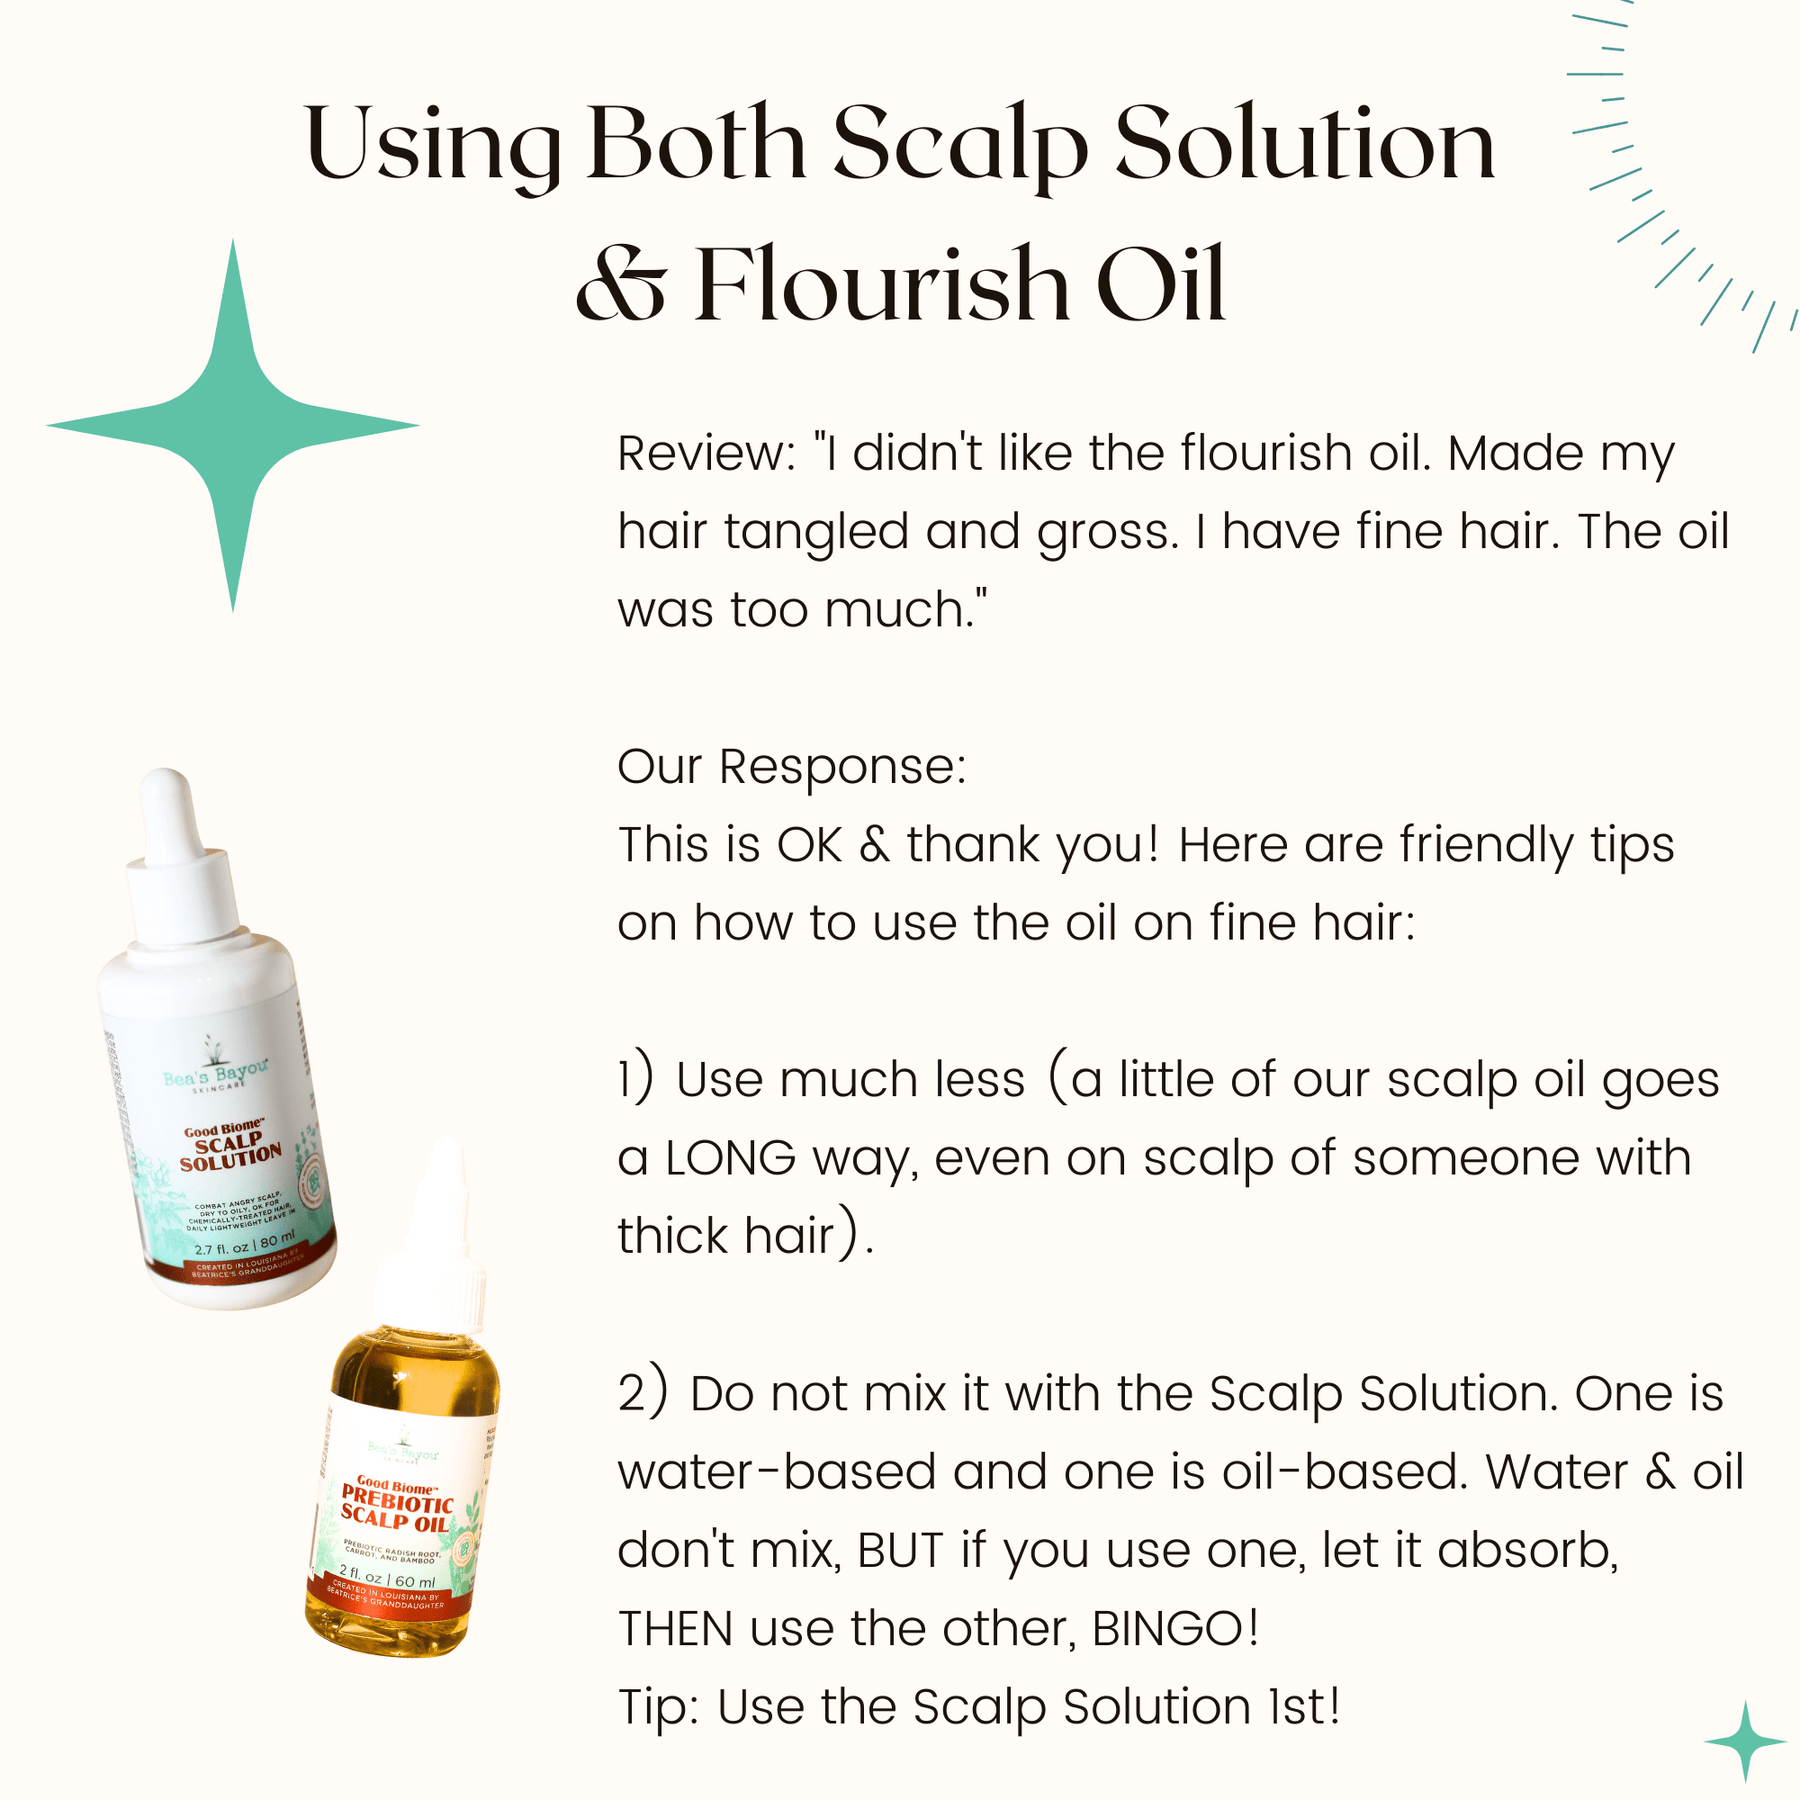 Flaky Scalp Prebiotic Scalp Relief Oil | Soften, Grow, Seal